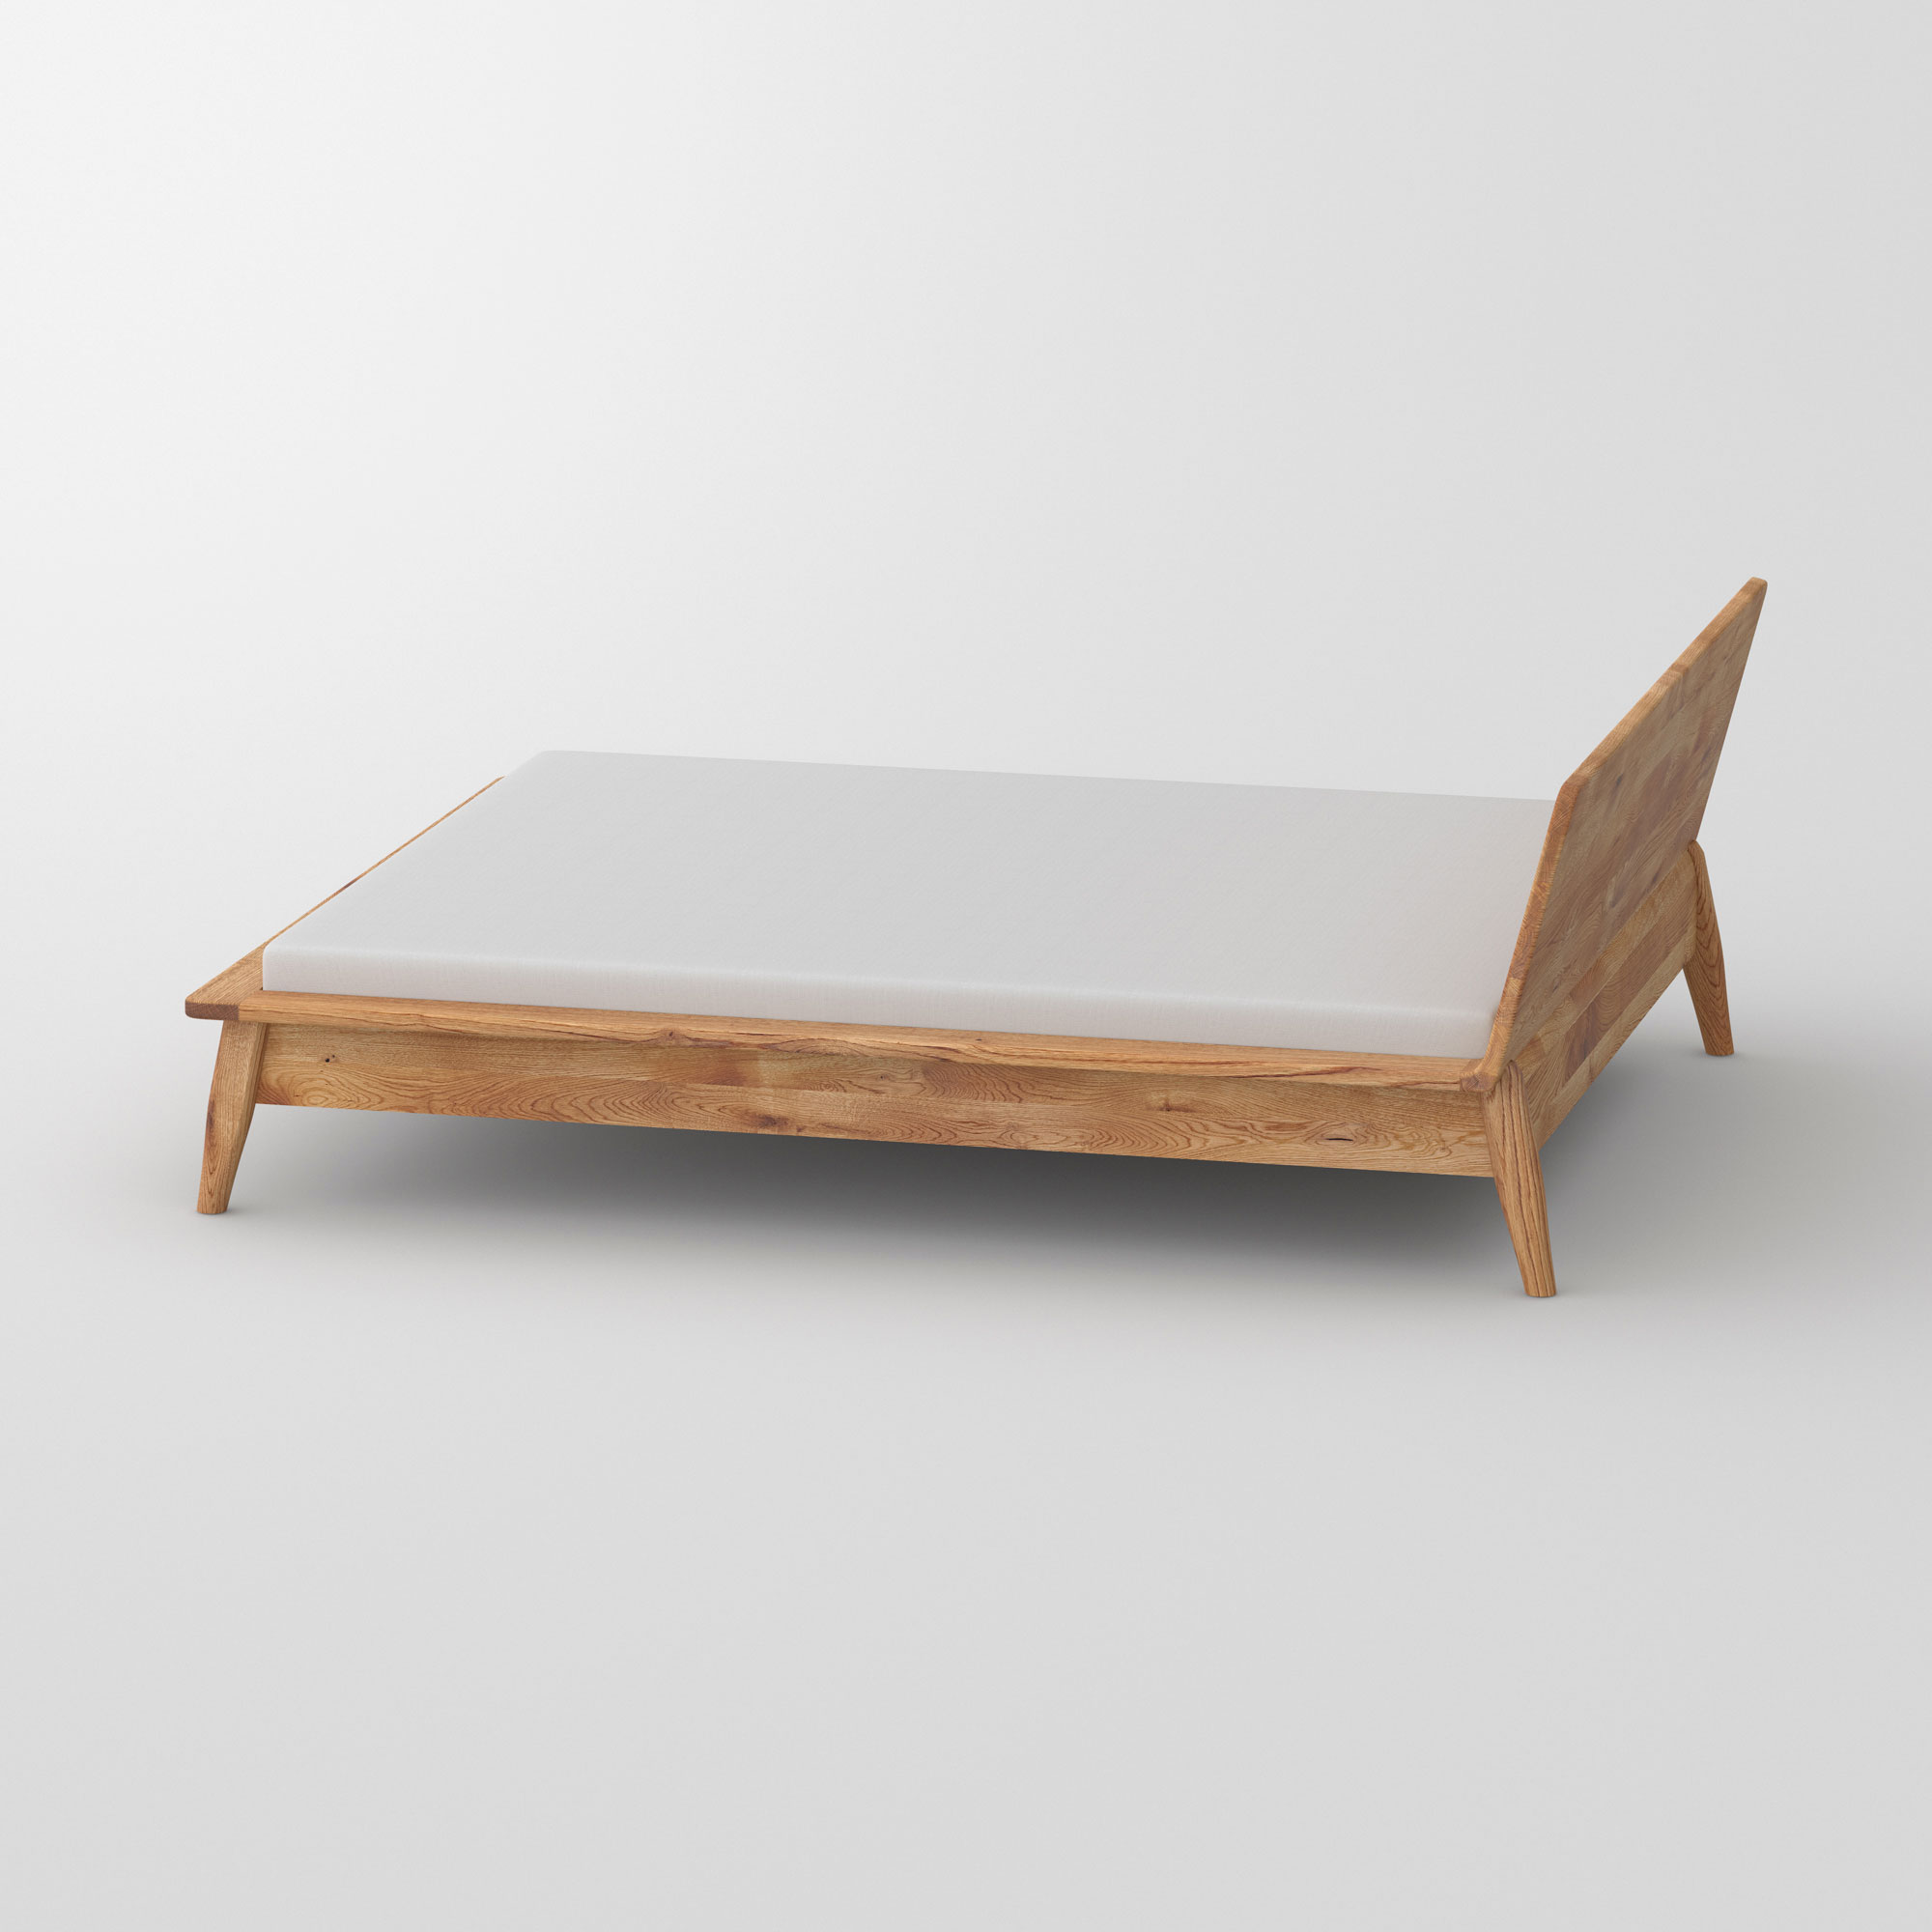 Designer Bed AETAS cam1 custom made in solid wood by vitamin design